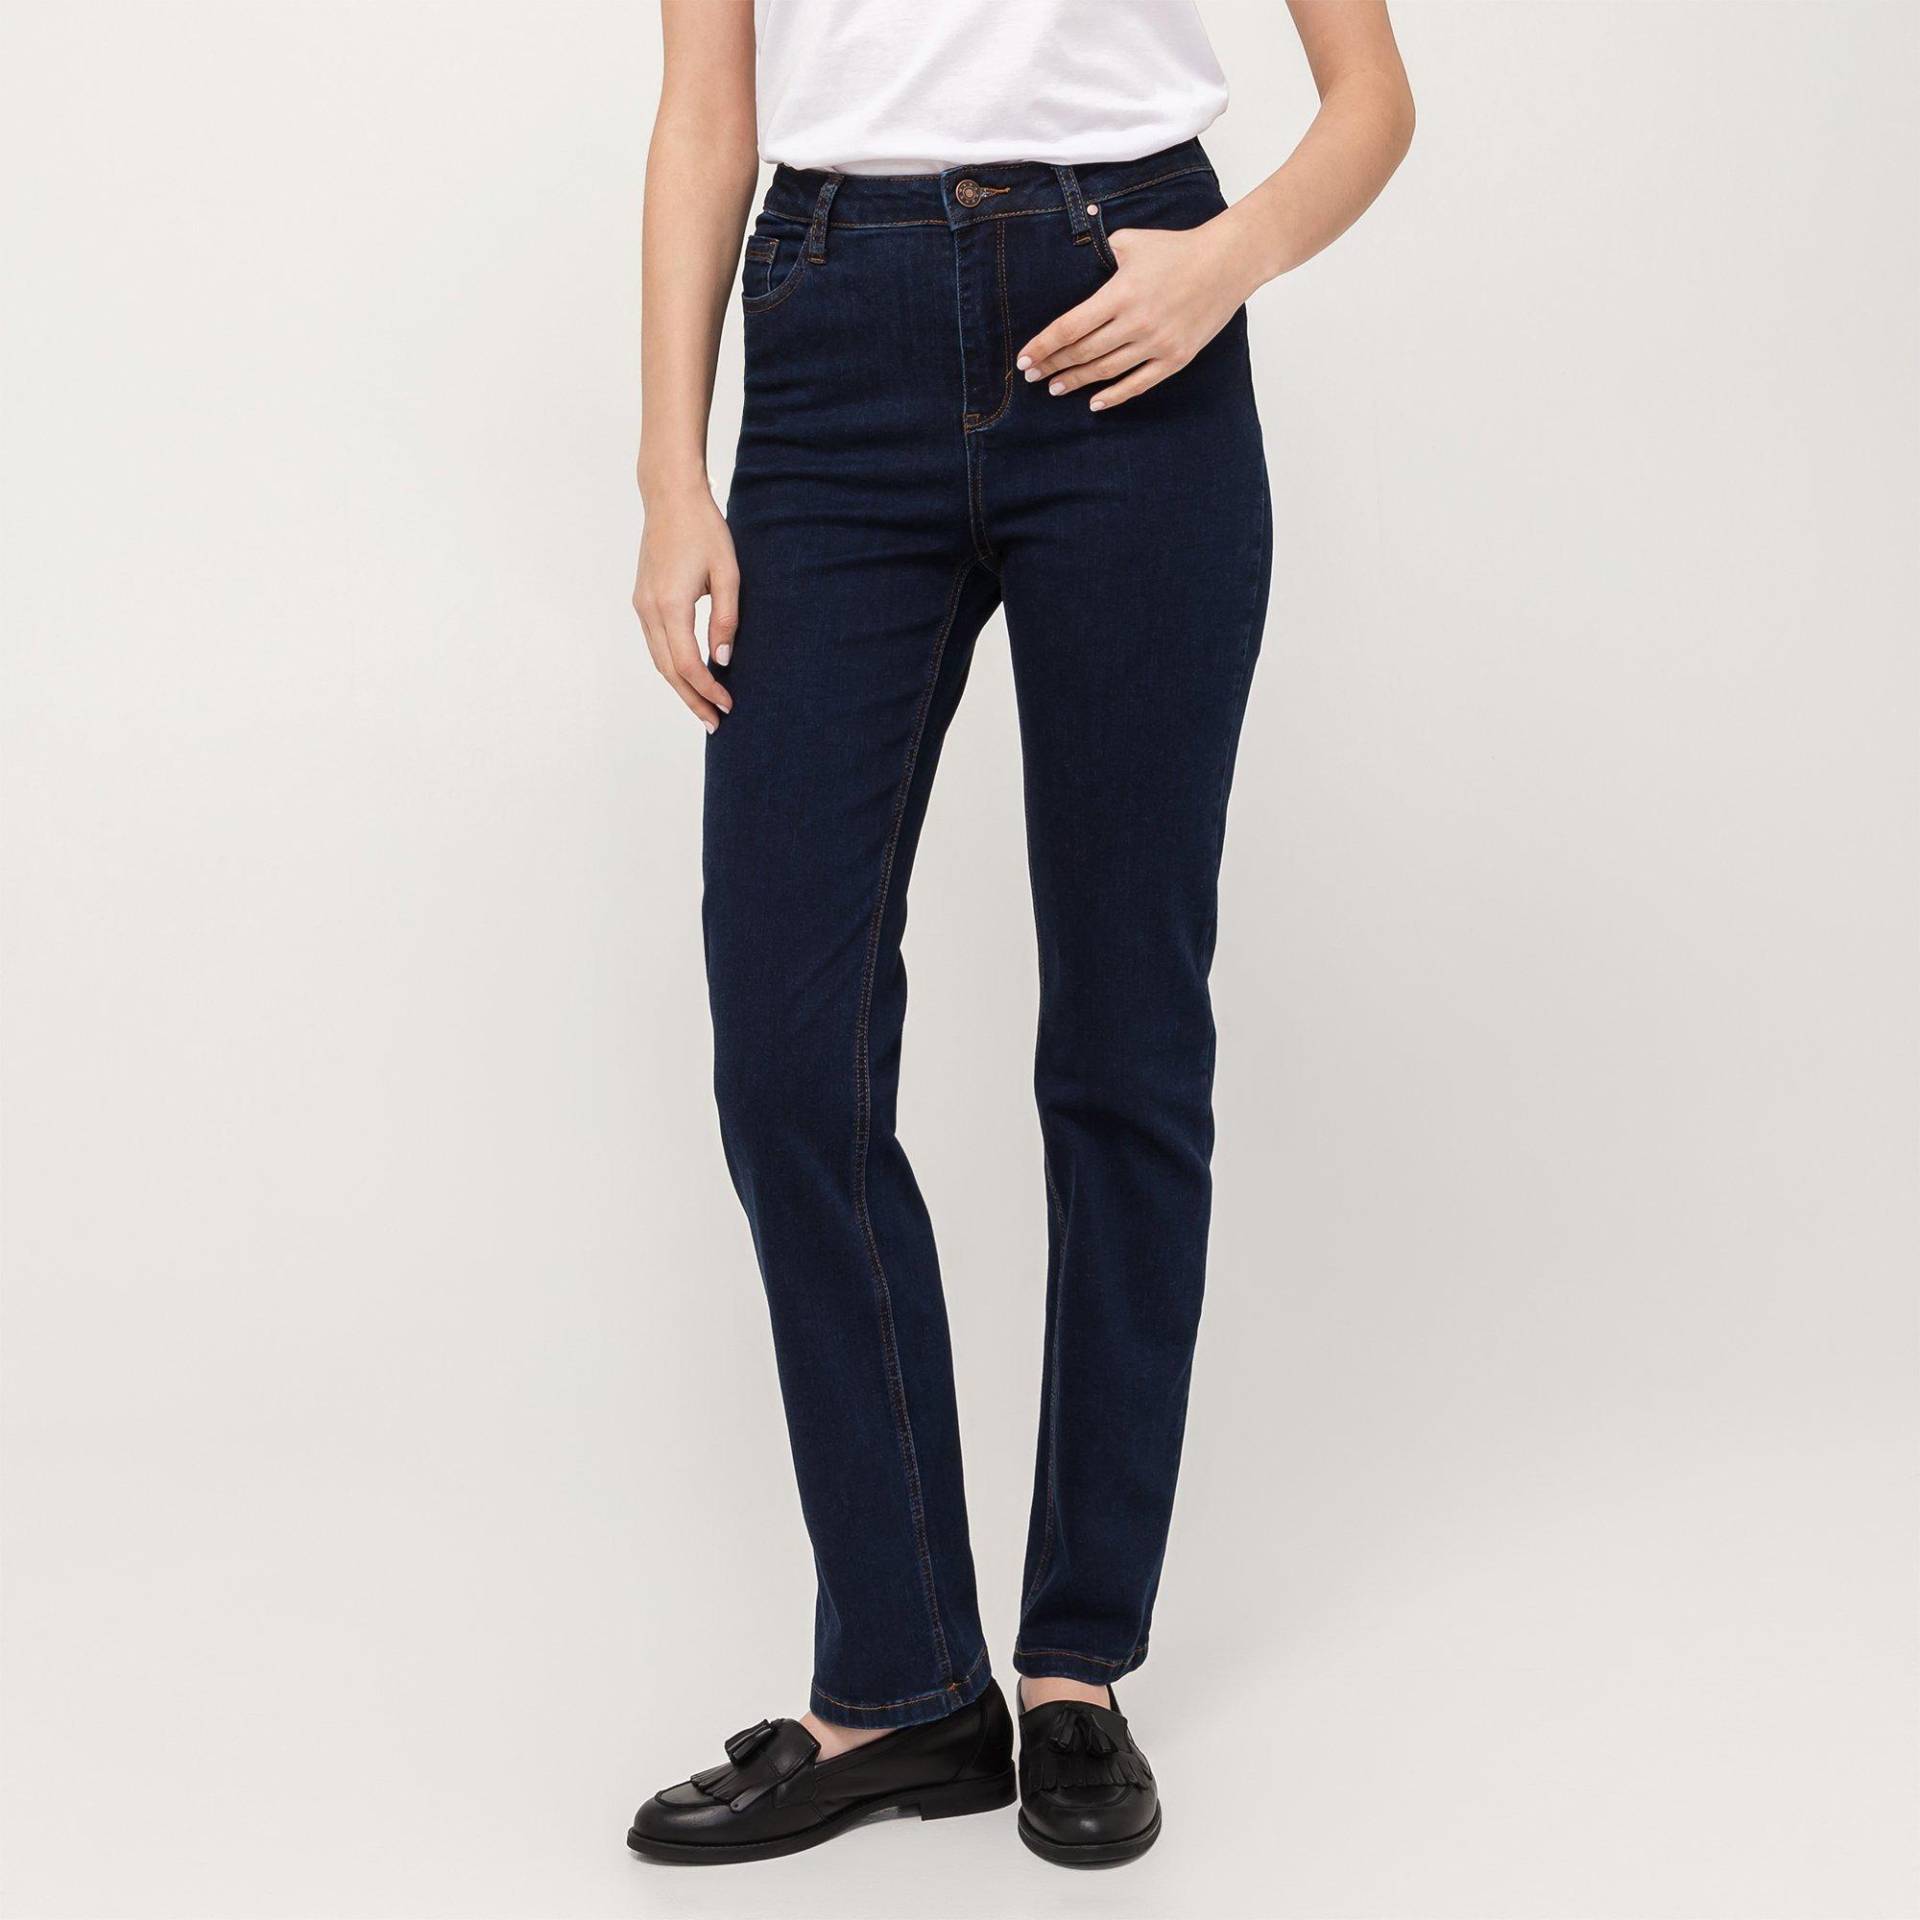 Jeans, Straight Leg Fit Damen Blau Denim Dunkel L30/W42 von Manor Woman